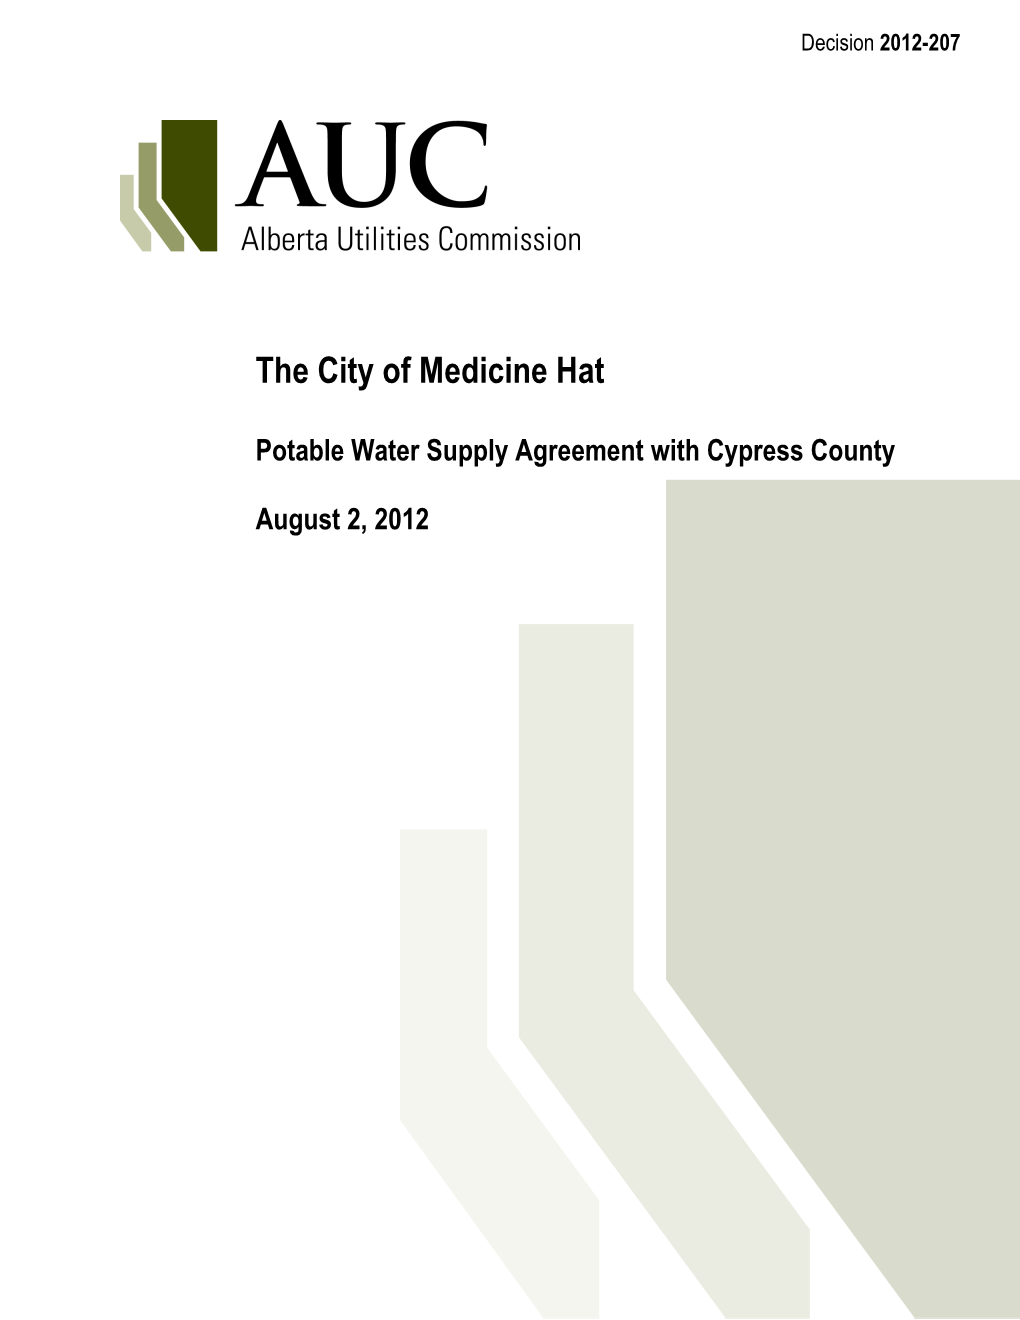 Decision 2012-207 the City of Medicine